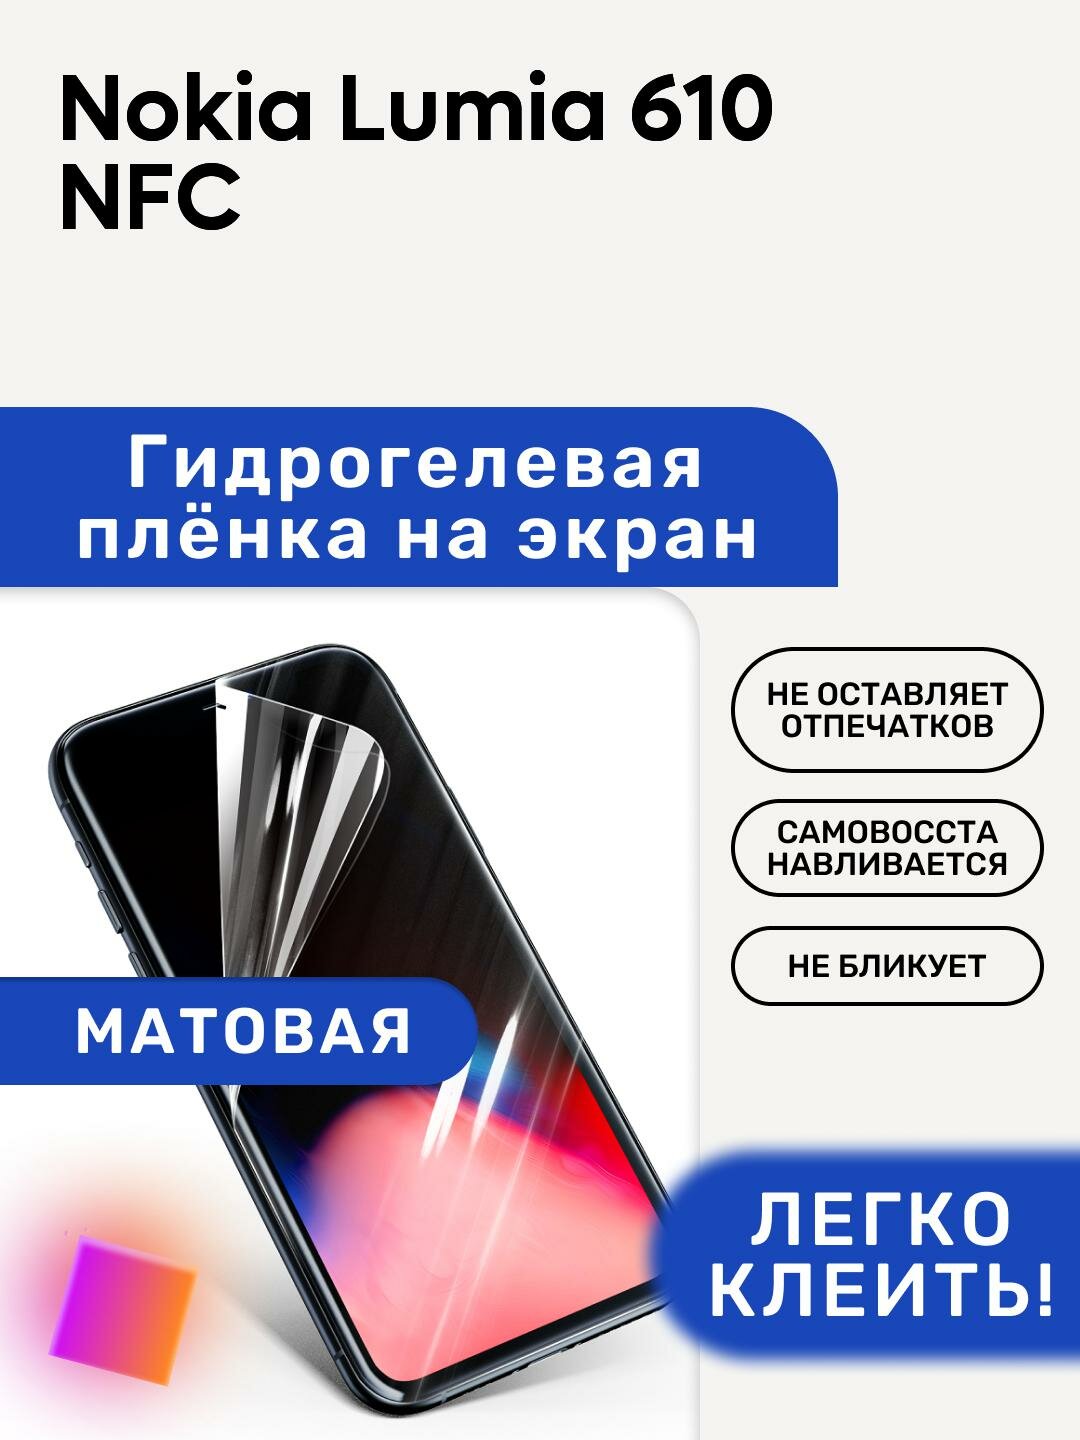 Матовая Гидрогелевая плёнка, полиуретановая, защита экрана Nokia Lumia 610 NFC